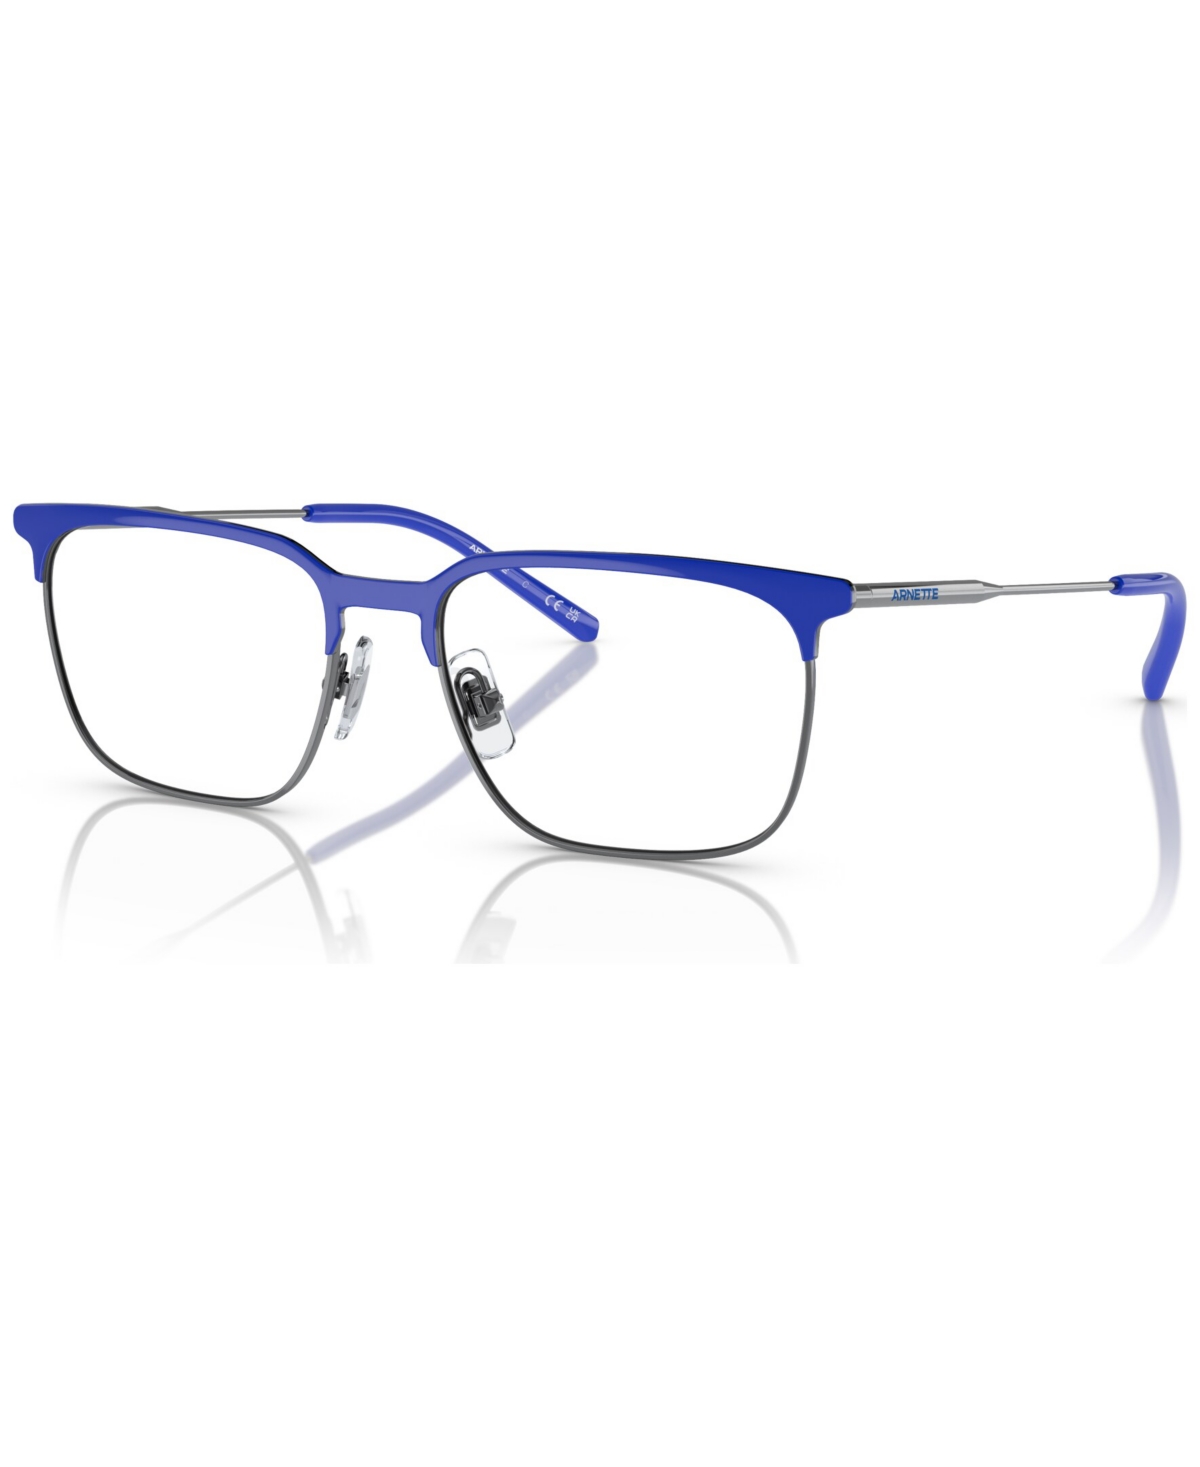 Men's Rectangle Eyeglasses, AN6136 53 - Royal Blue